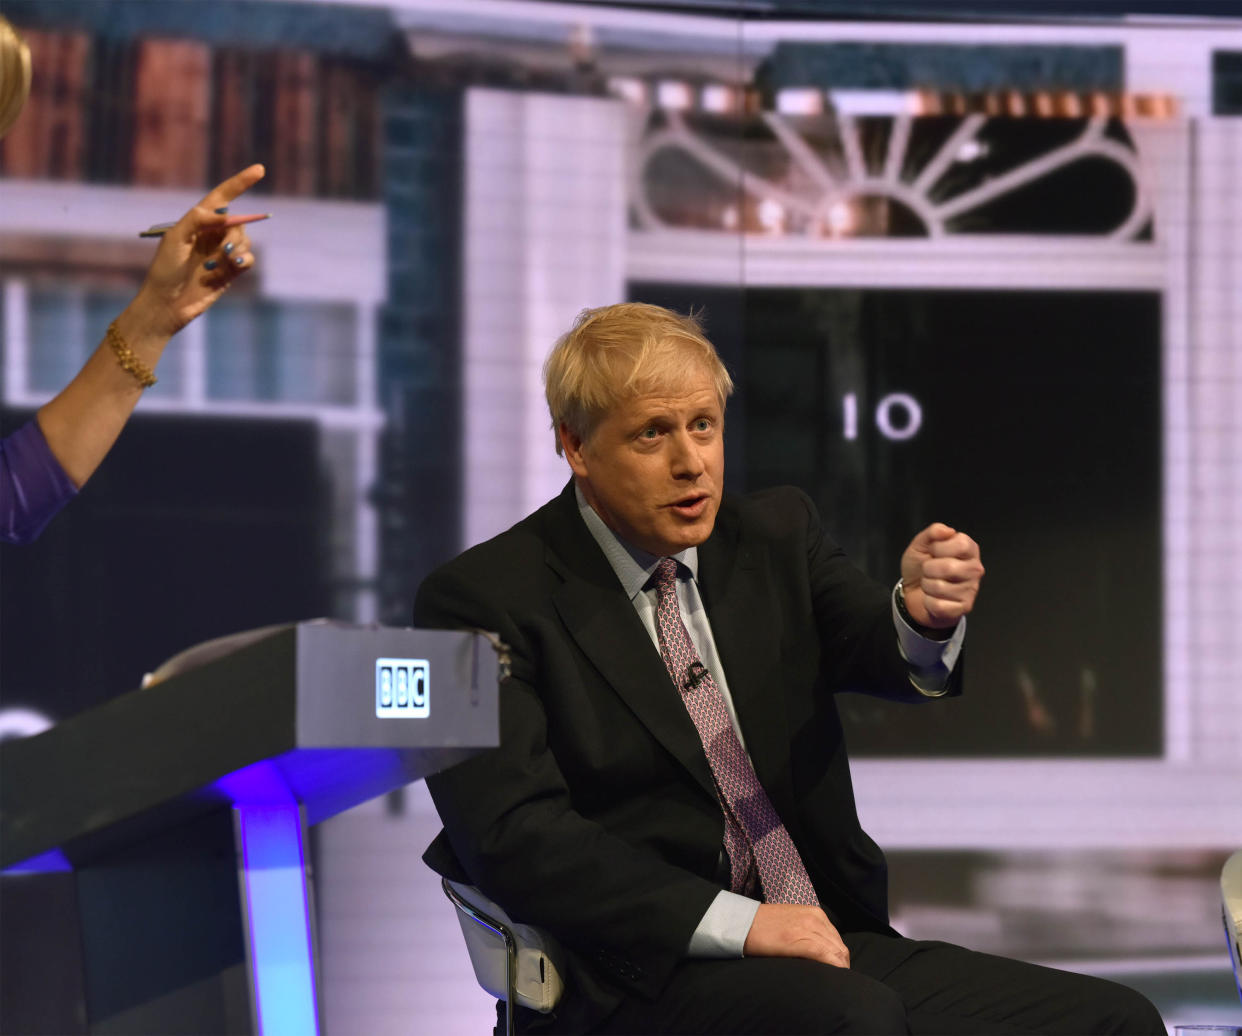 Boris Johnson put himself up for a rare opportunity if public scrutiny